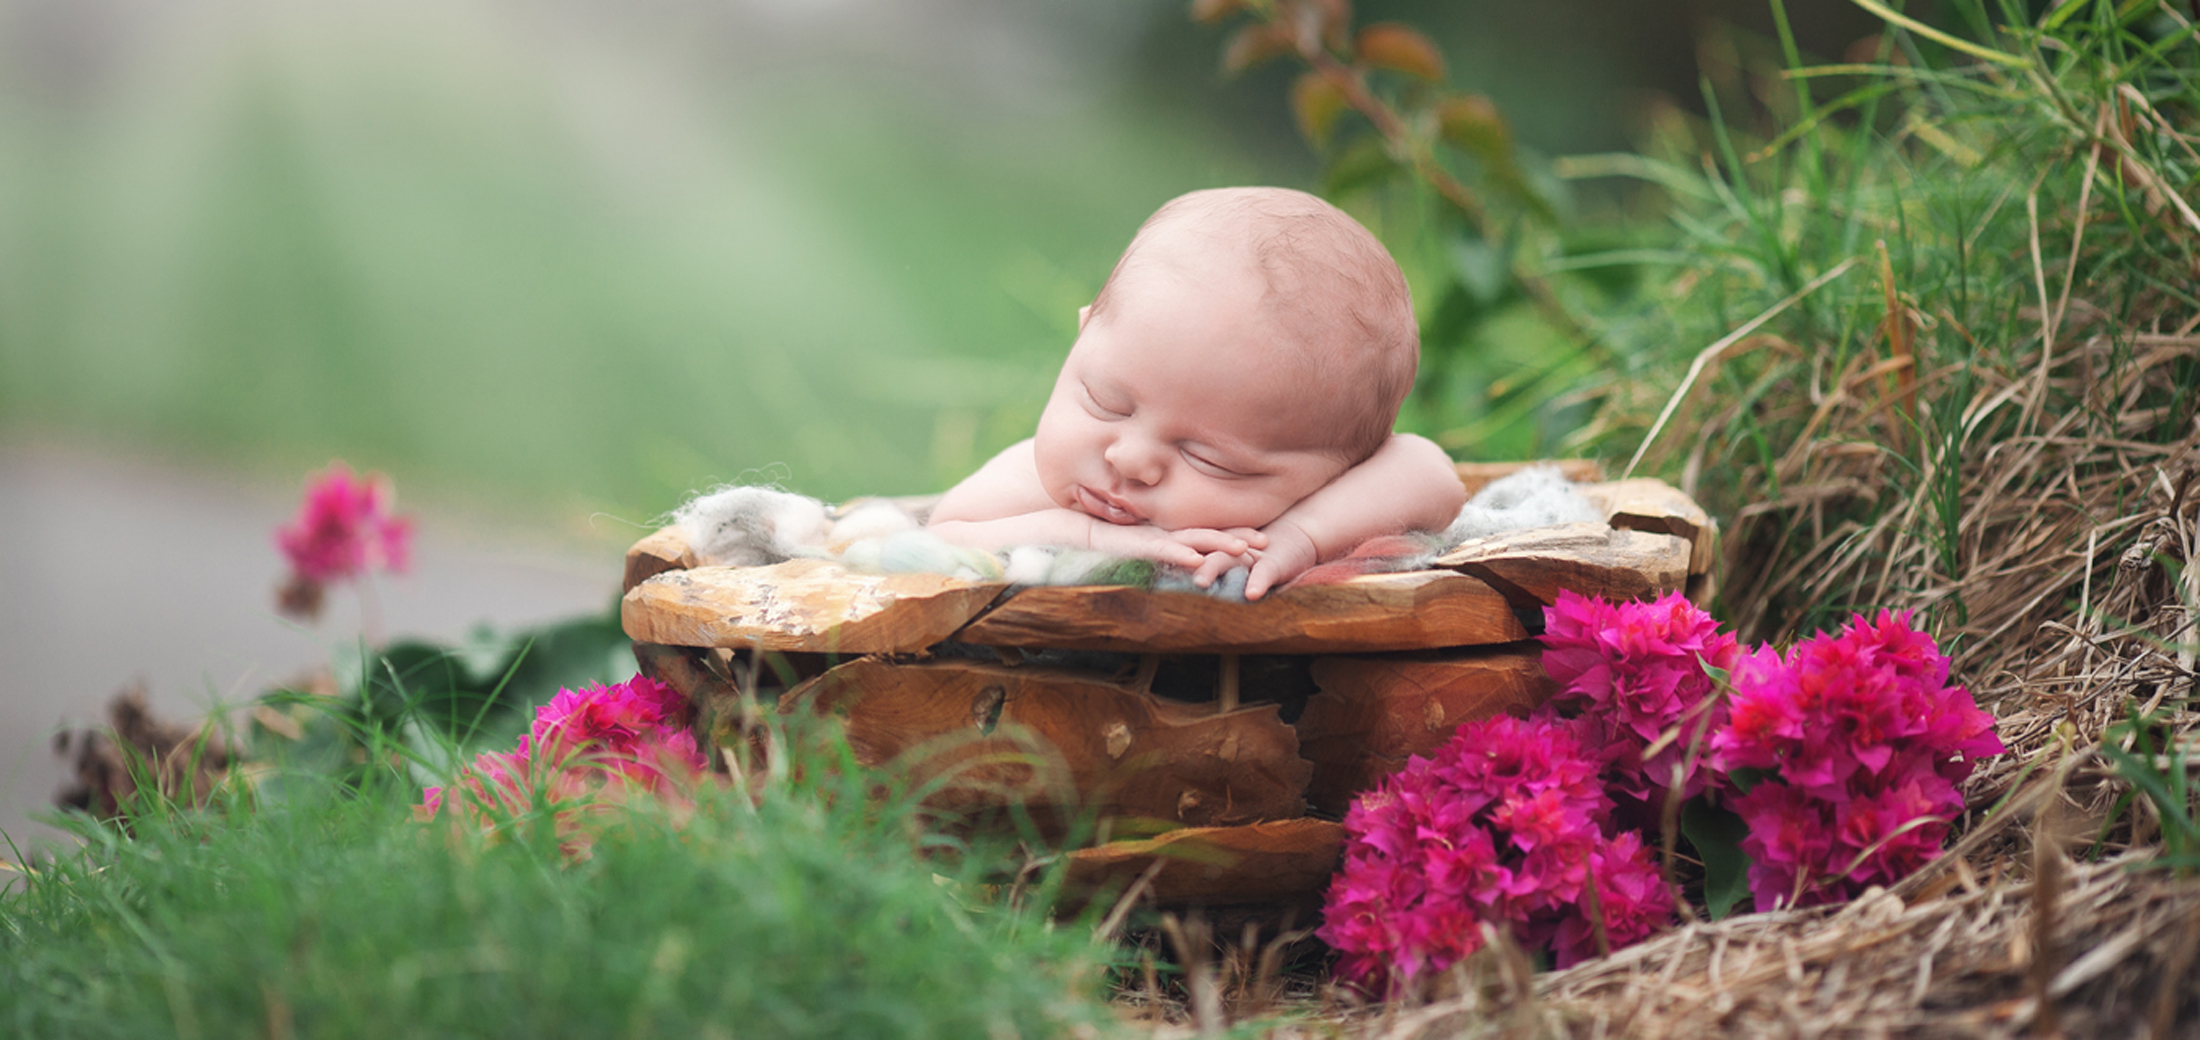 newborn asleep outside with flowers